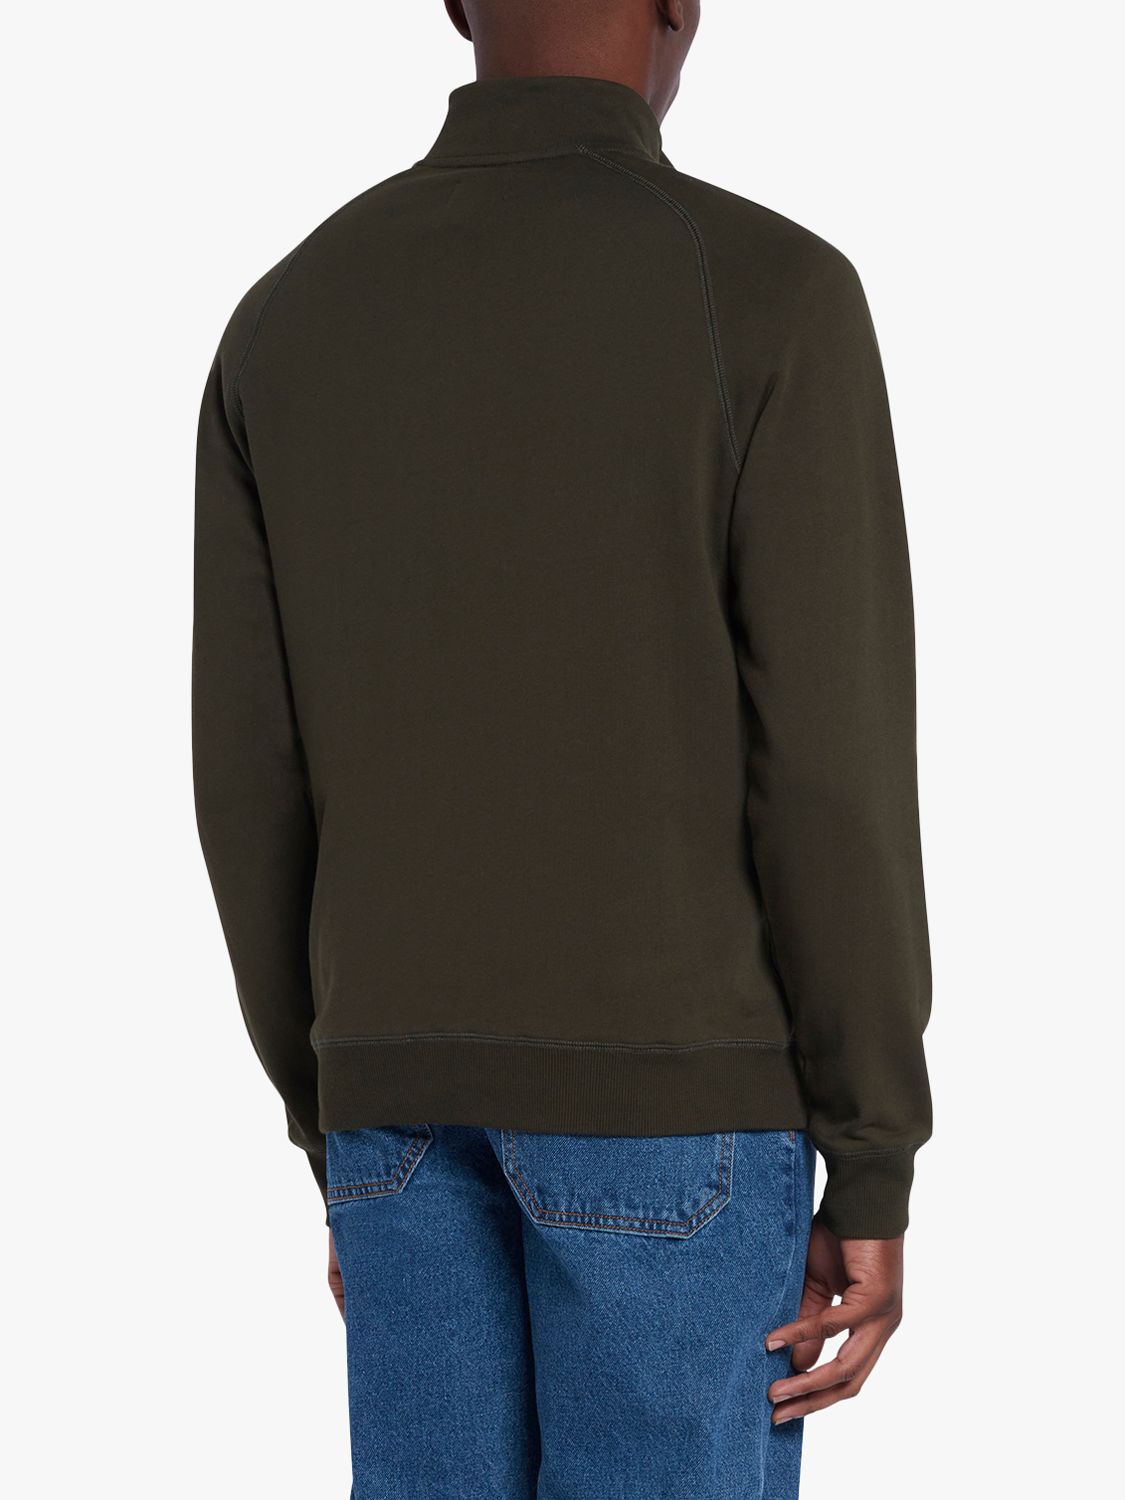 Farah Jim 1/4 Zip Slim Fit Organic Cotton Sweatshirt, Evergreen, S